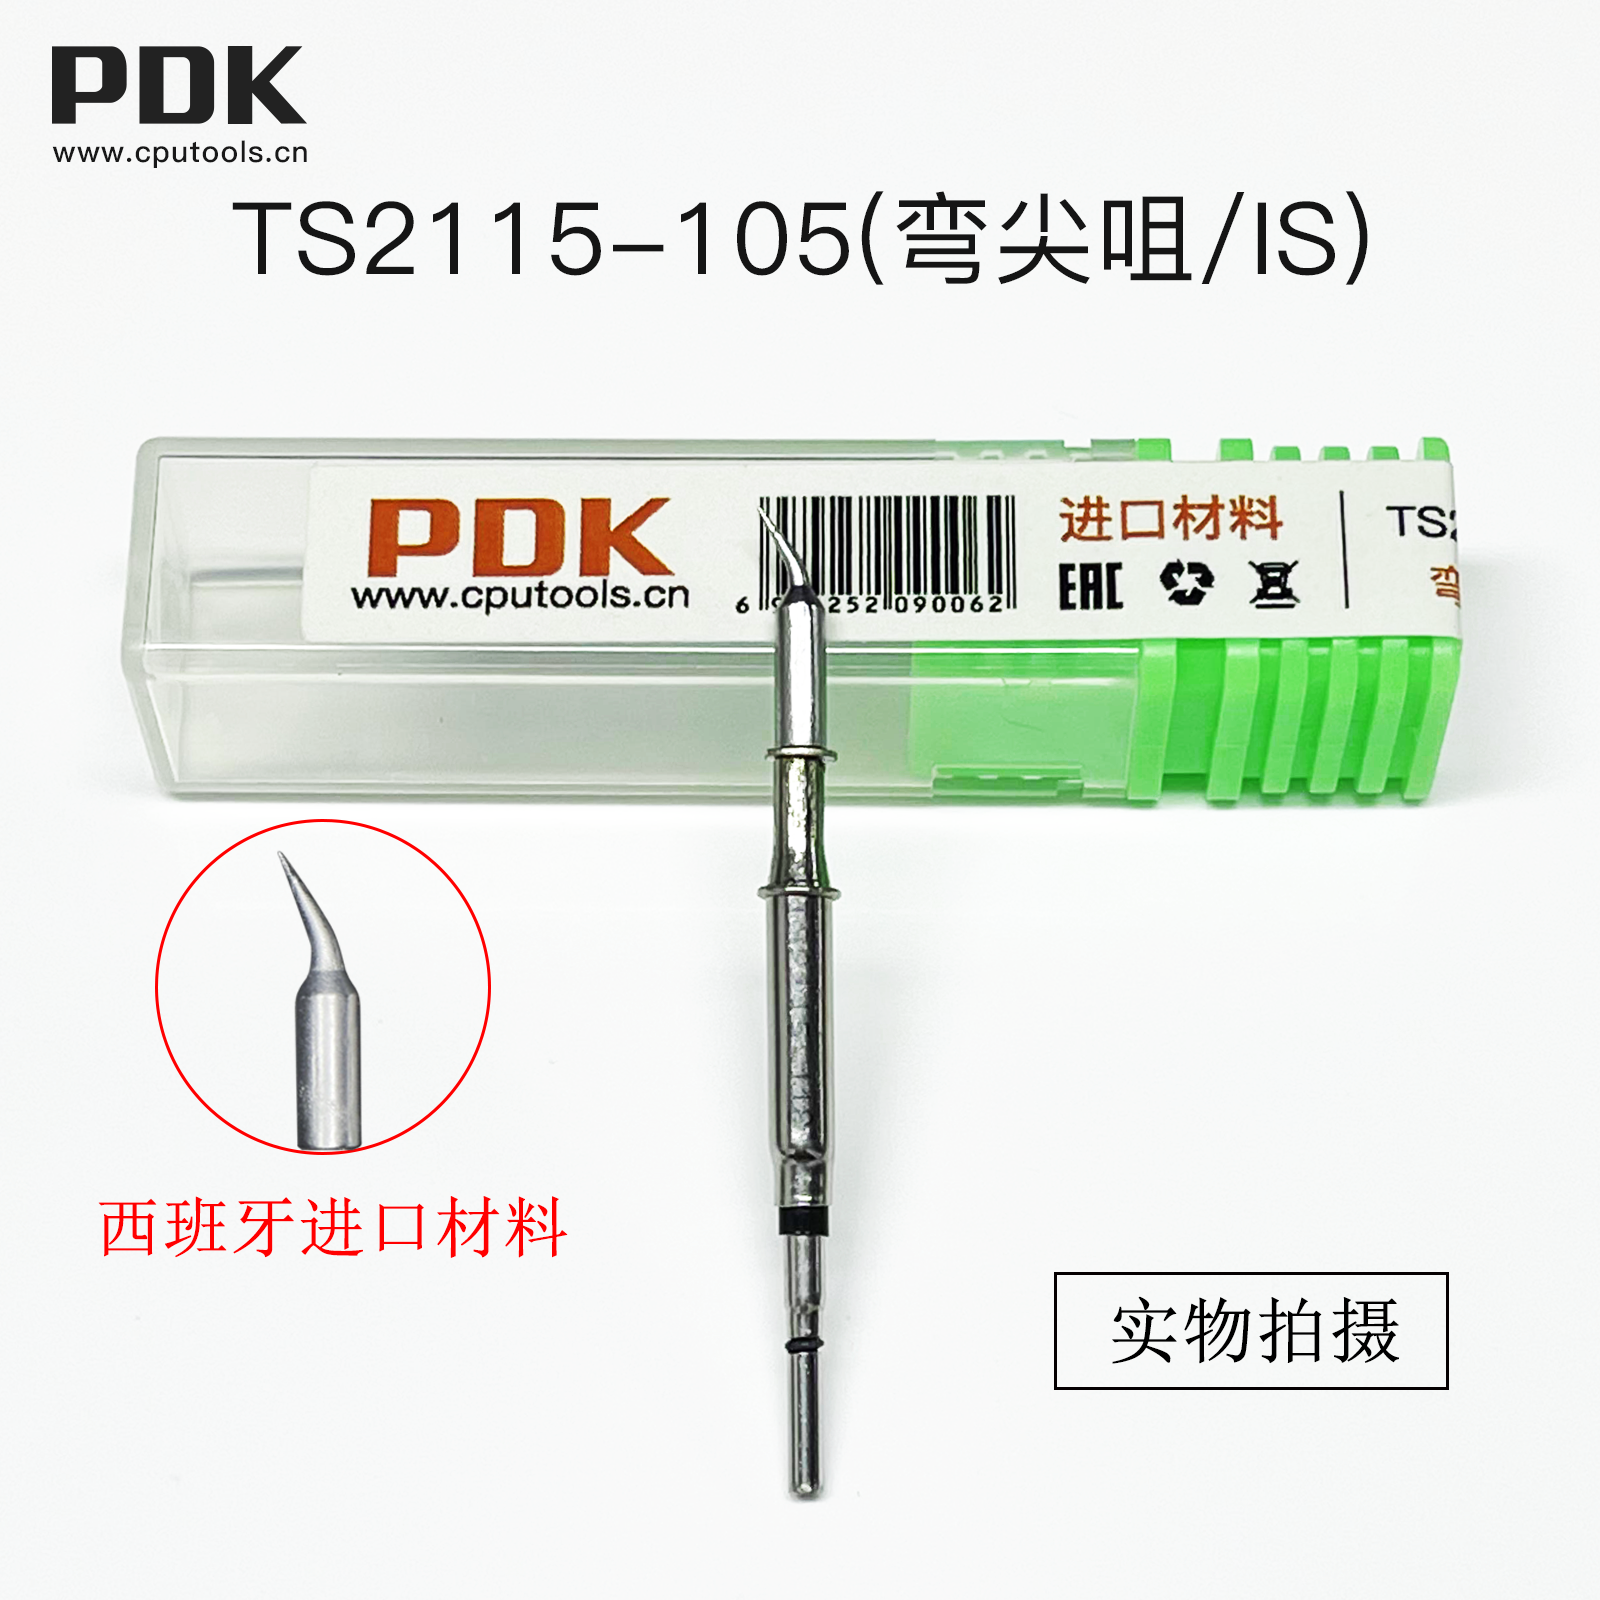 PDK TS2-C115 hand shank(图3)